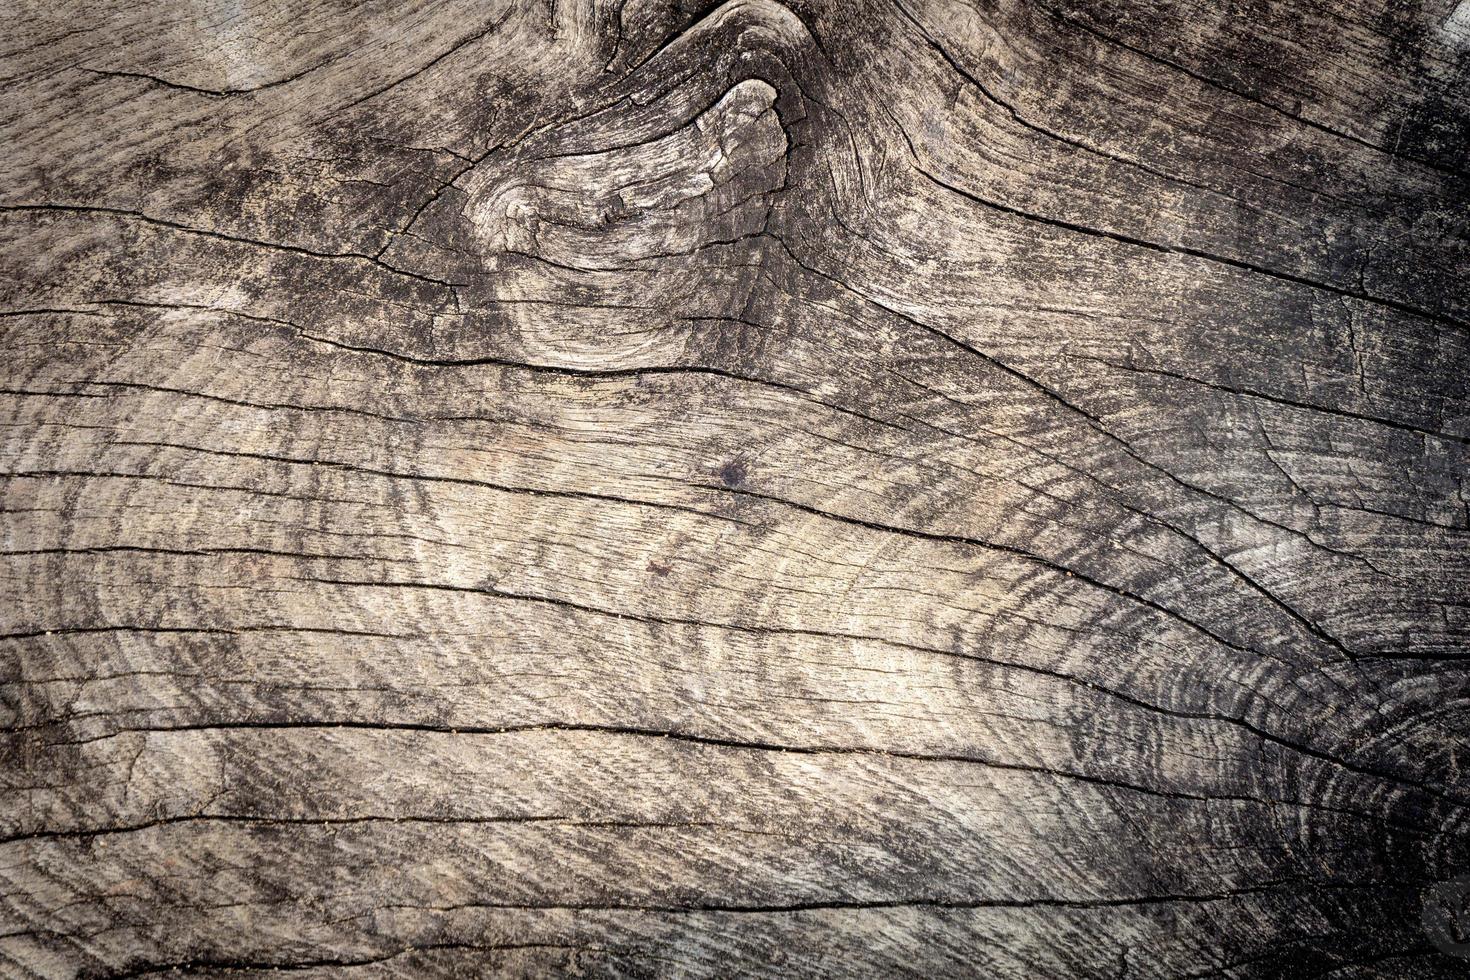 textura e fundo de prancha de madeira dura foto